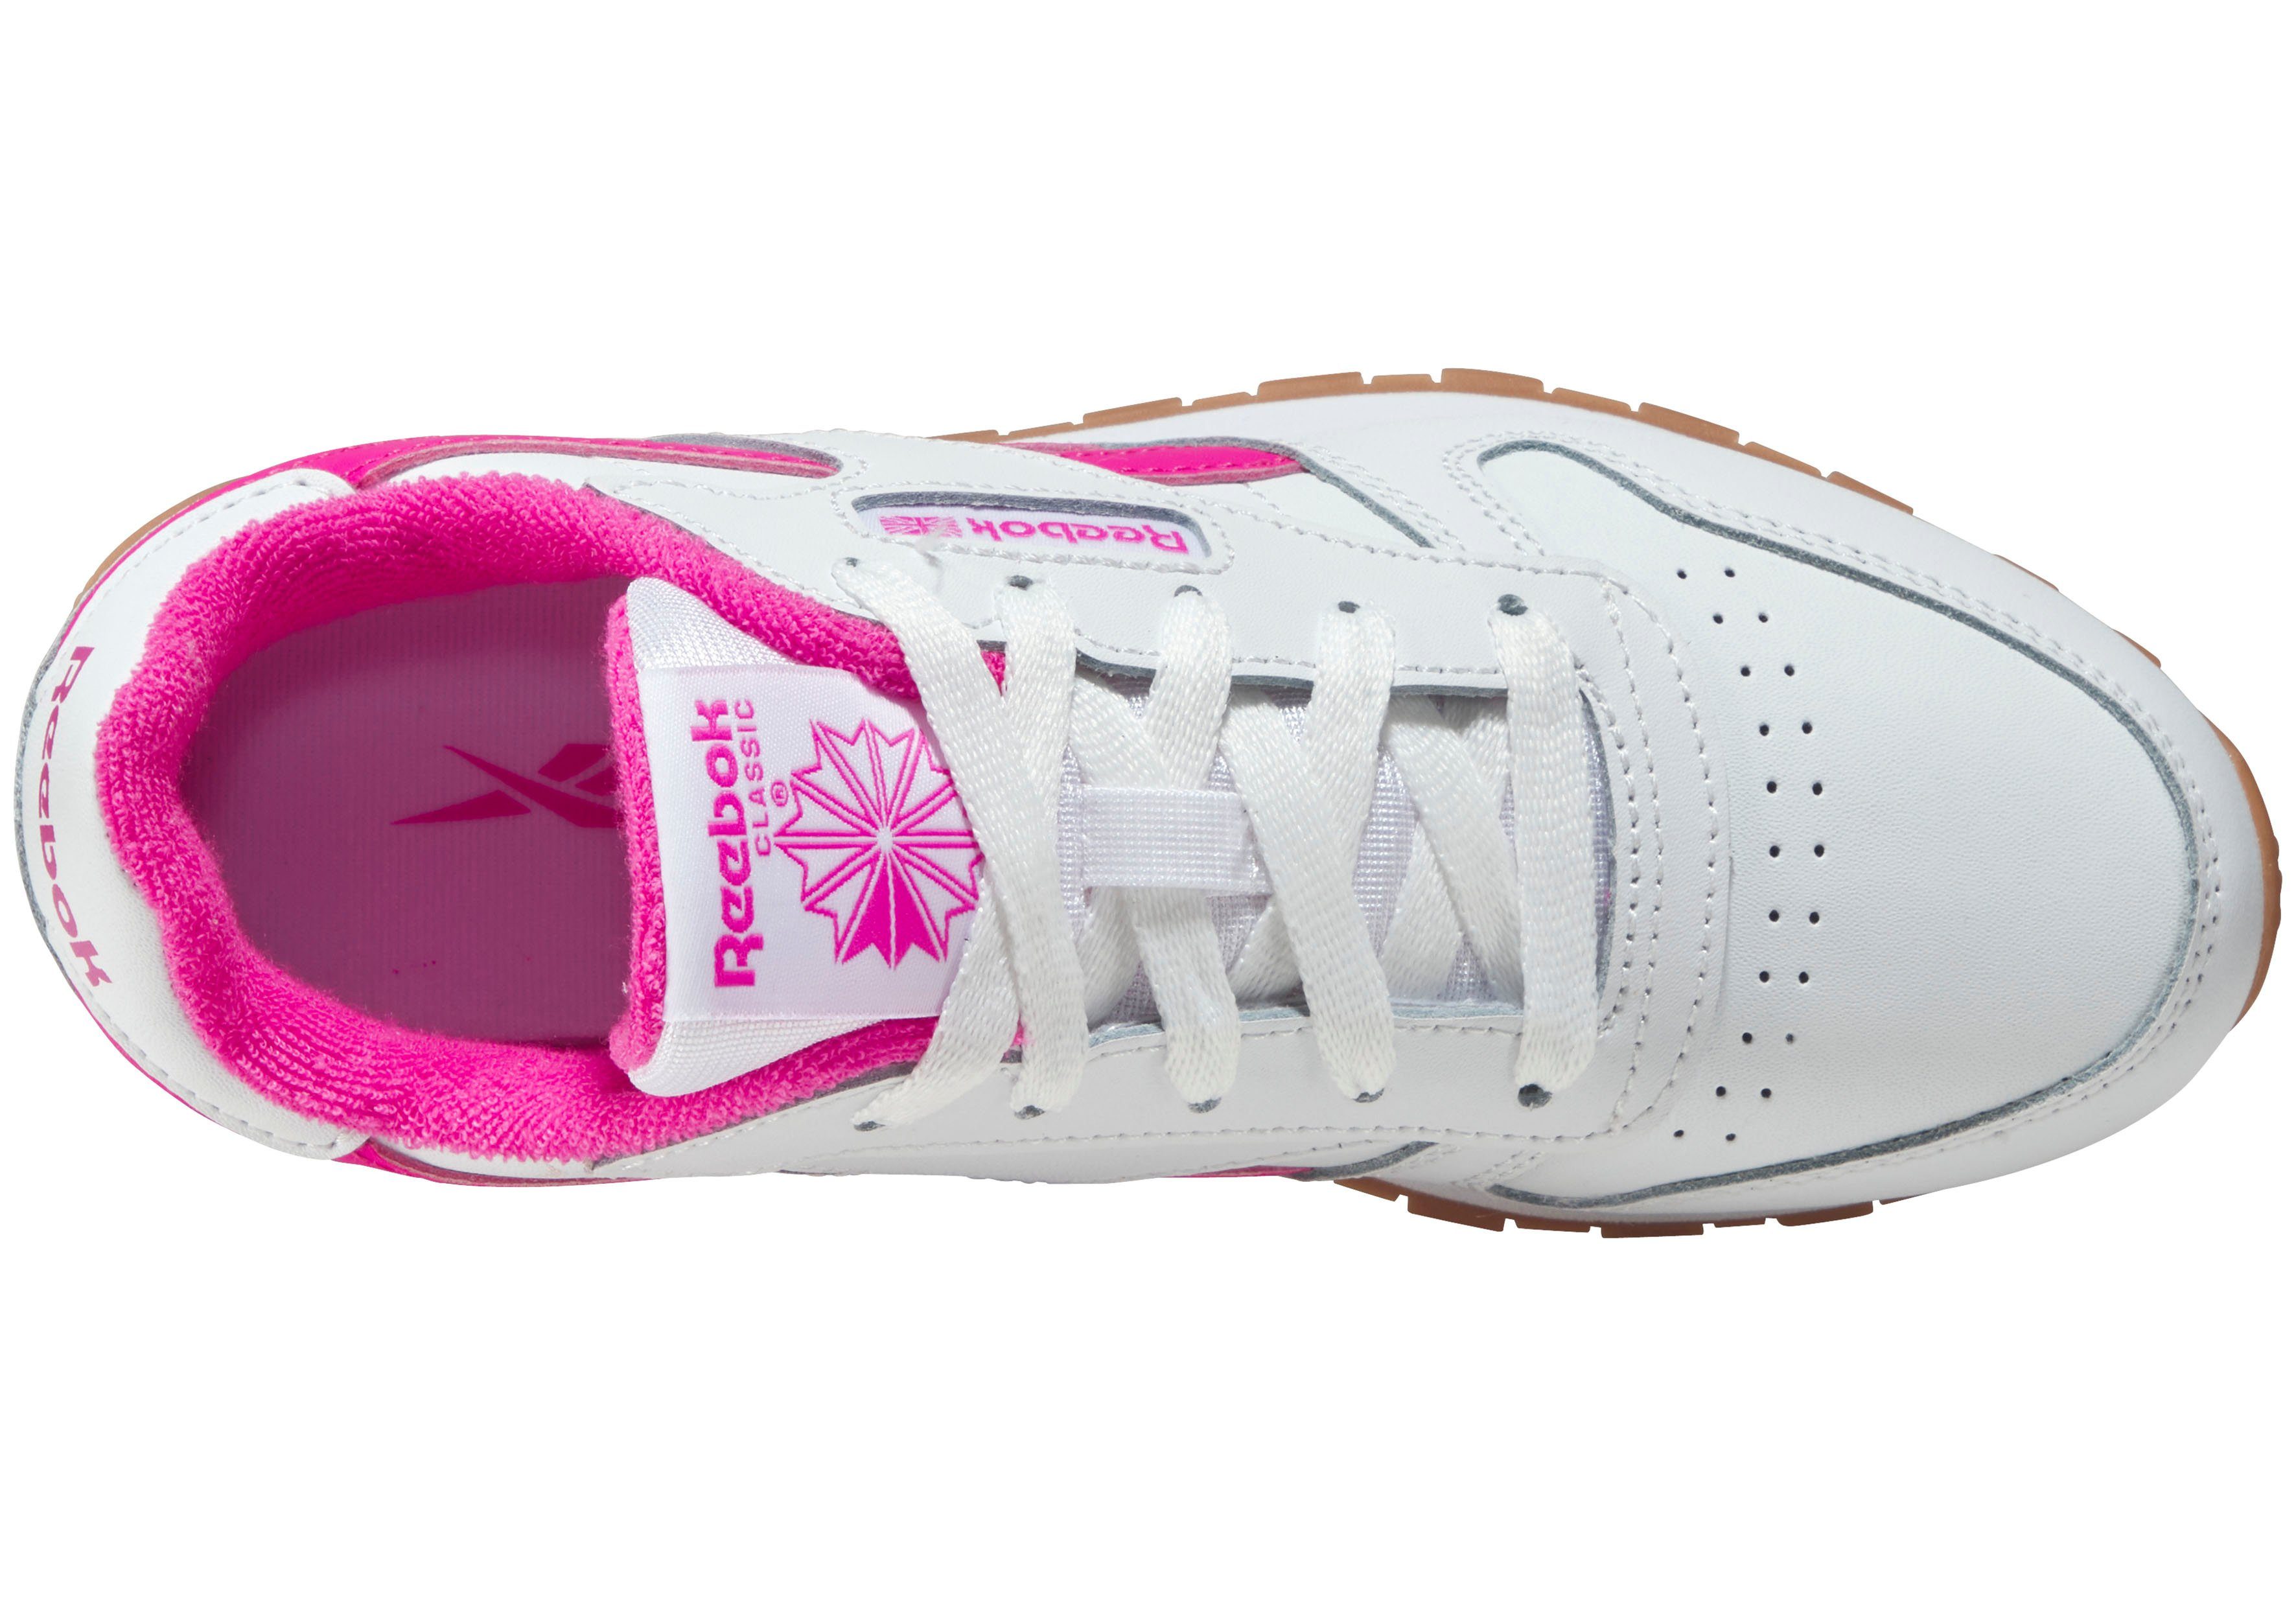 LEATHER CLASSIC weiß-pink Reebok Classic Sneaker